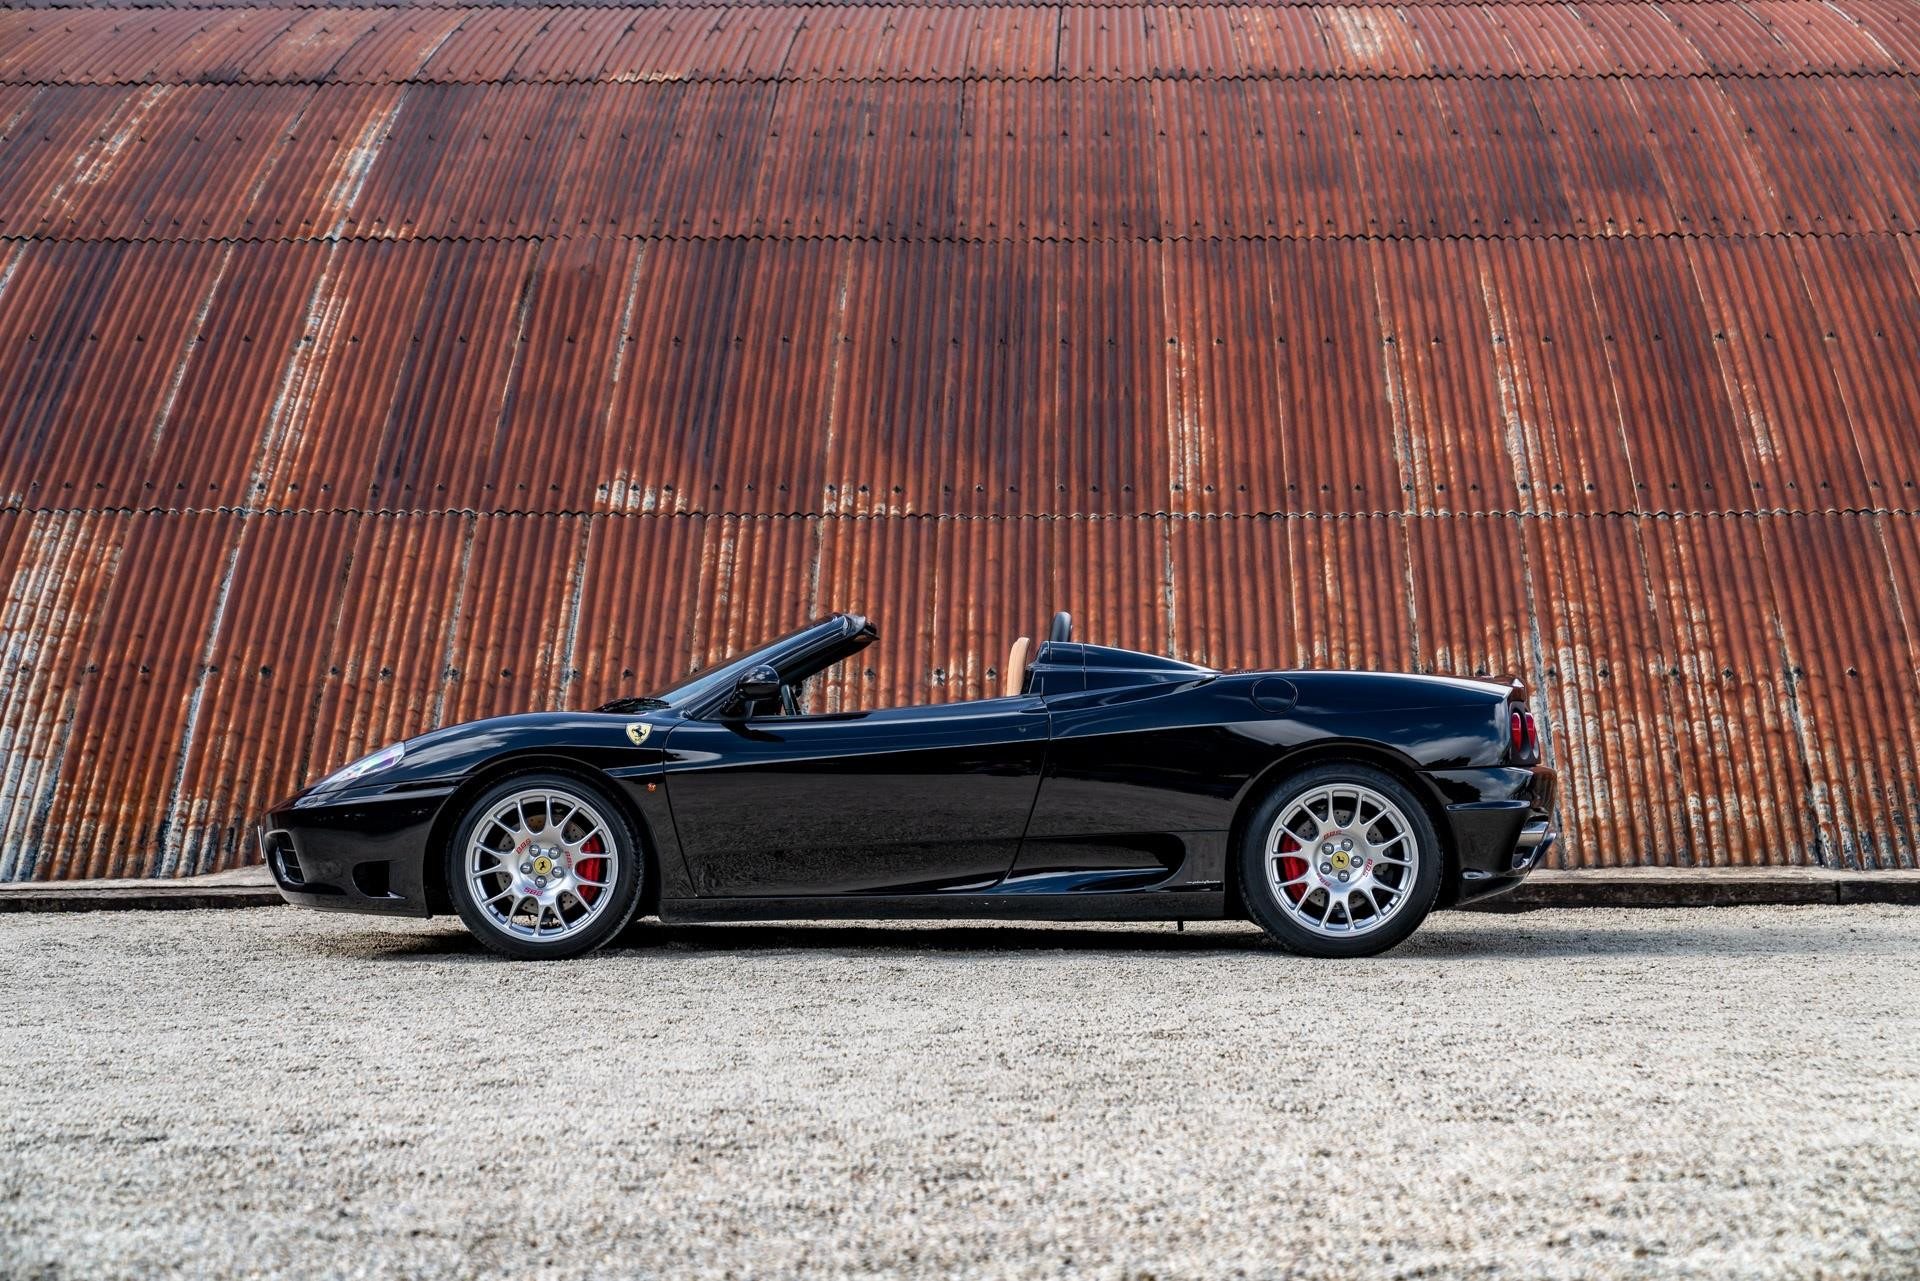 Chi tiết siêu xe Ferrari 360 Spider của David Beckham - 6